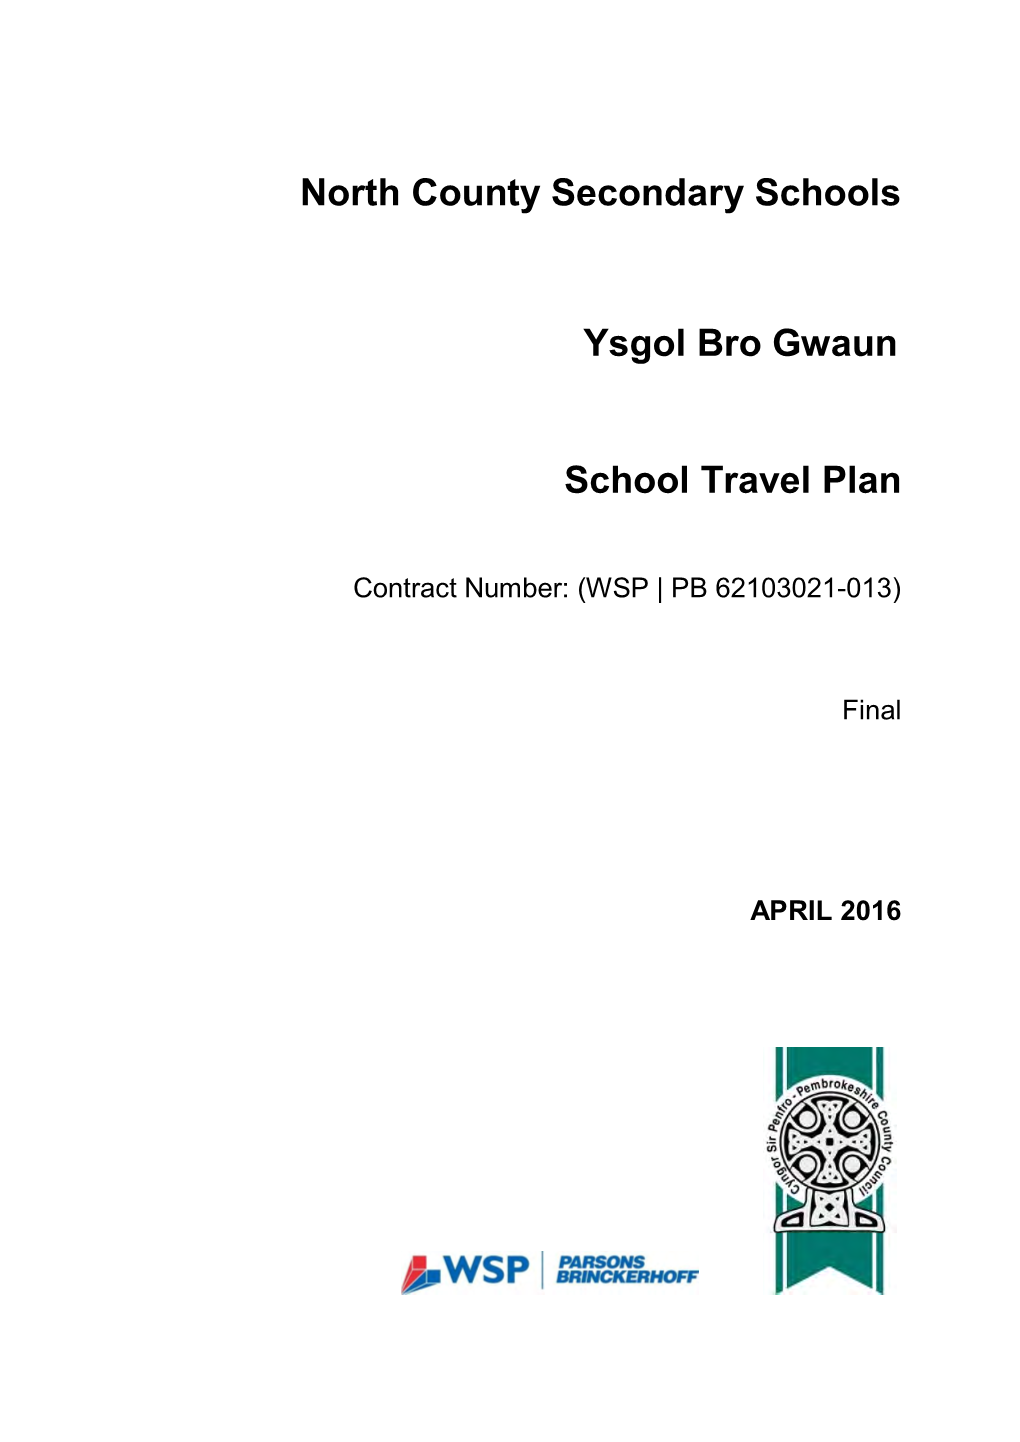 Ysgol Bro Gwaun School Travel Plan